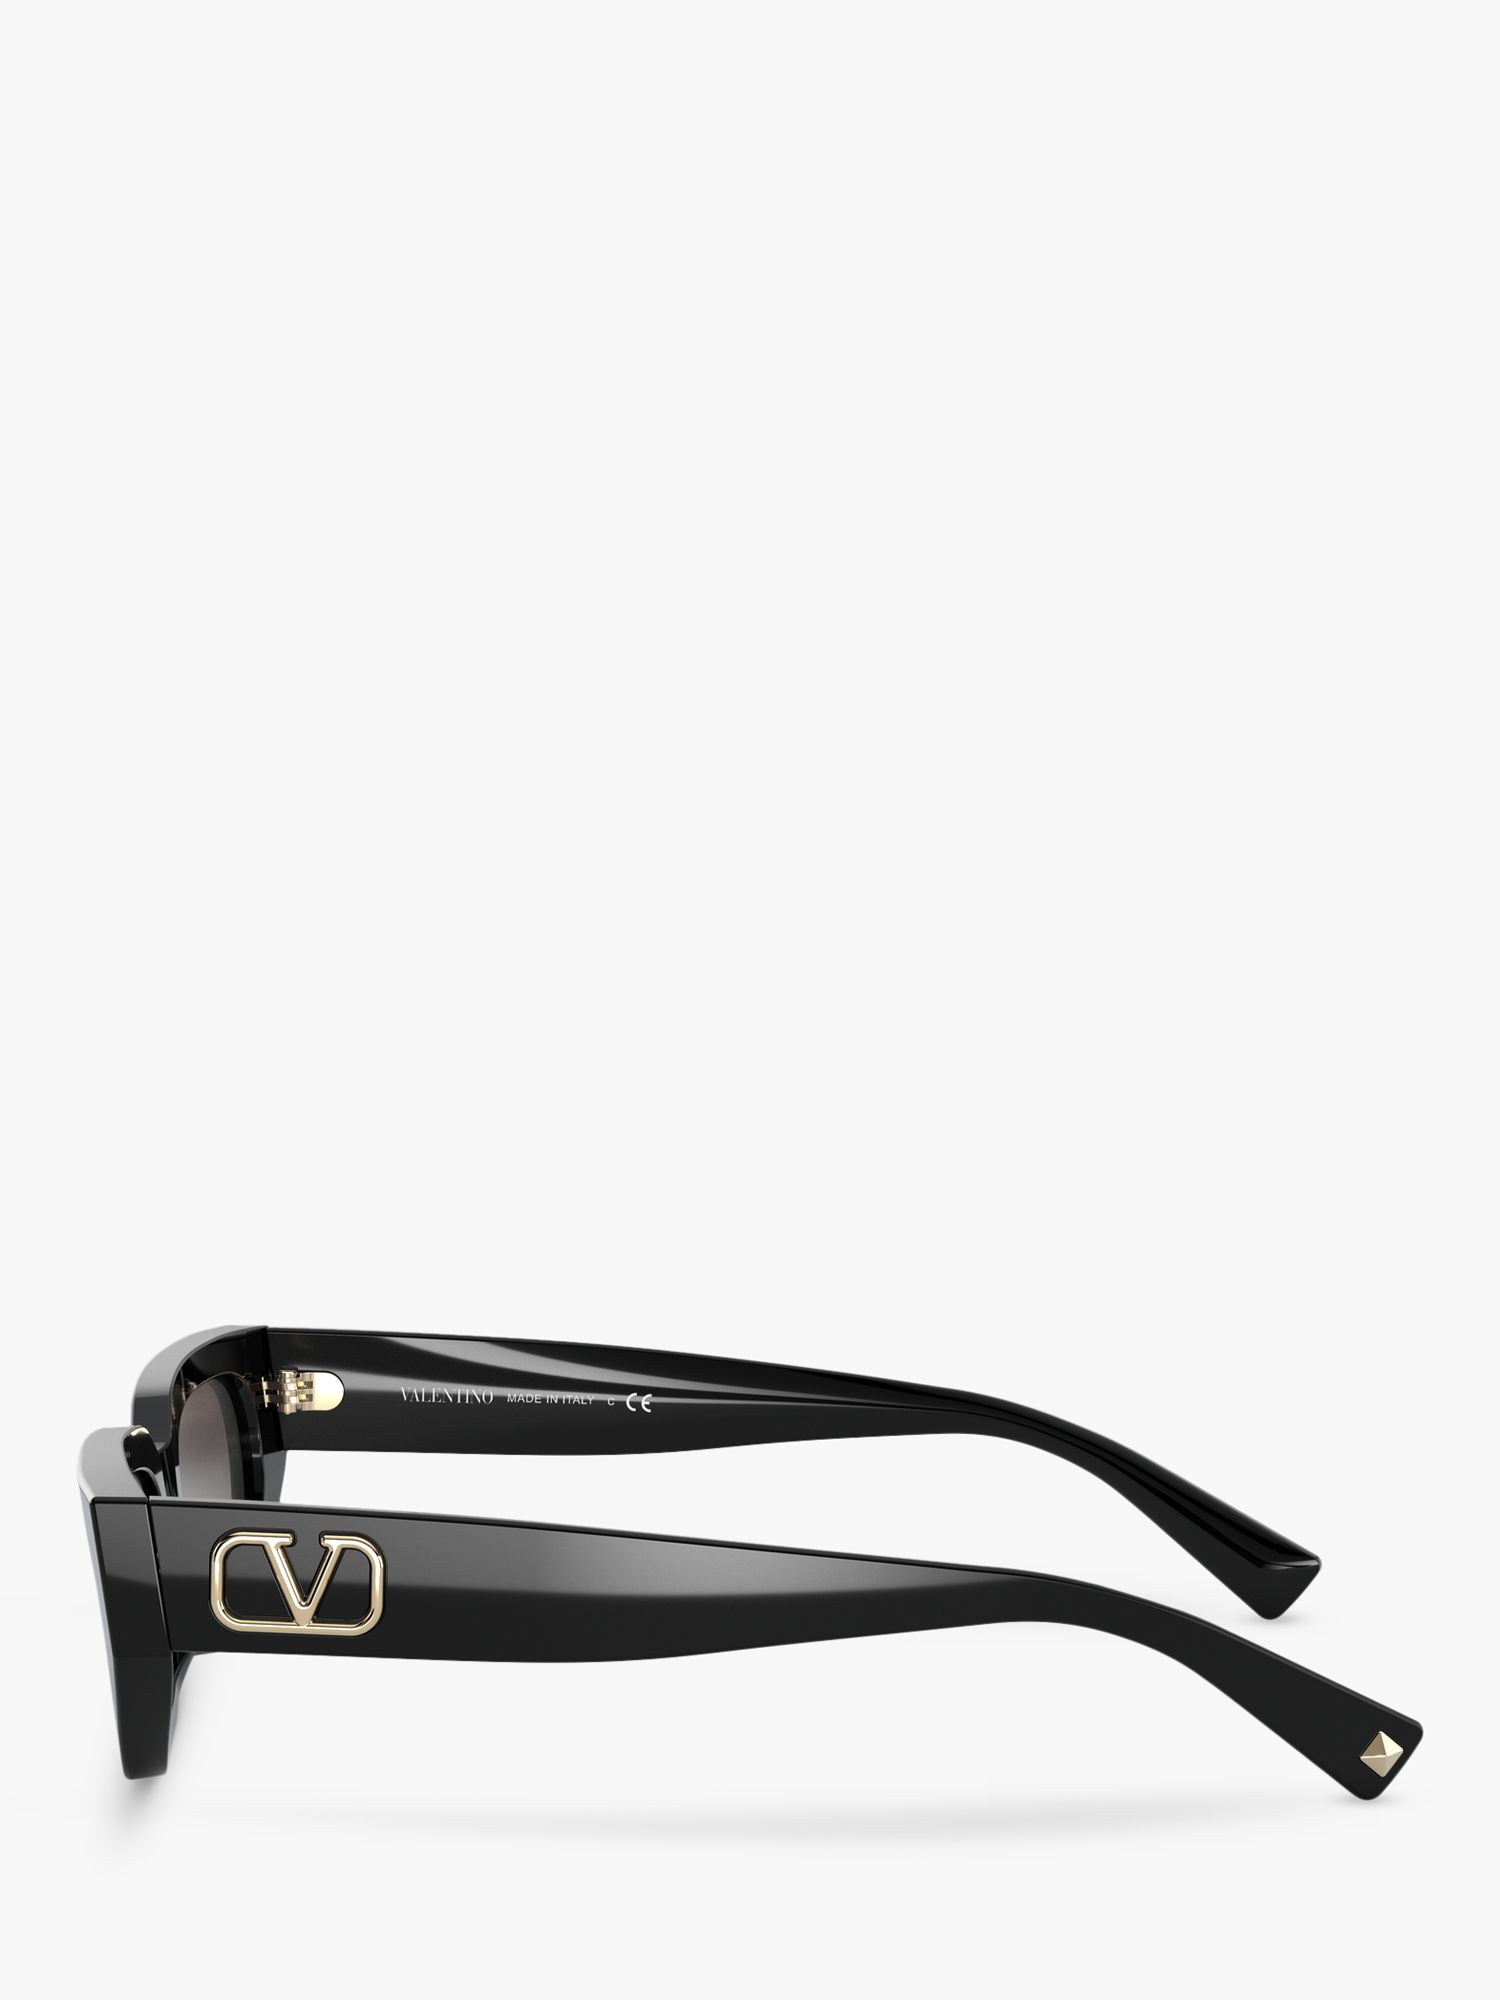 Valentino Rectangular Sunglasses, Black/Grey Gradient at John Lewis Partners